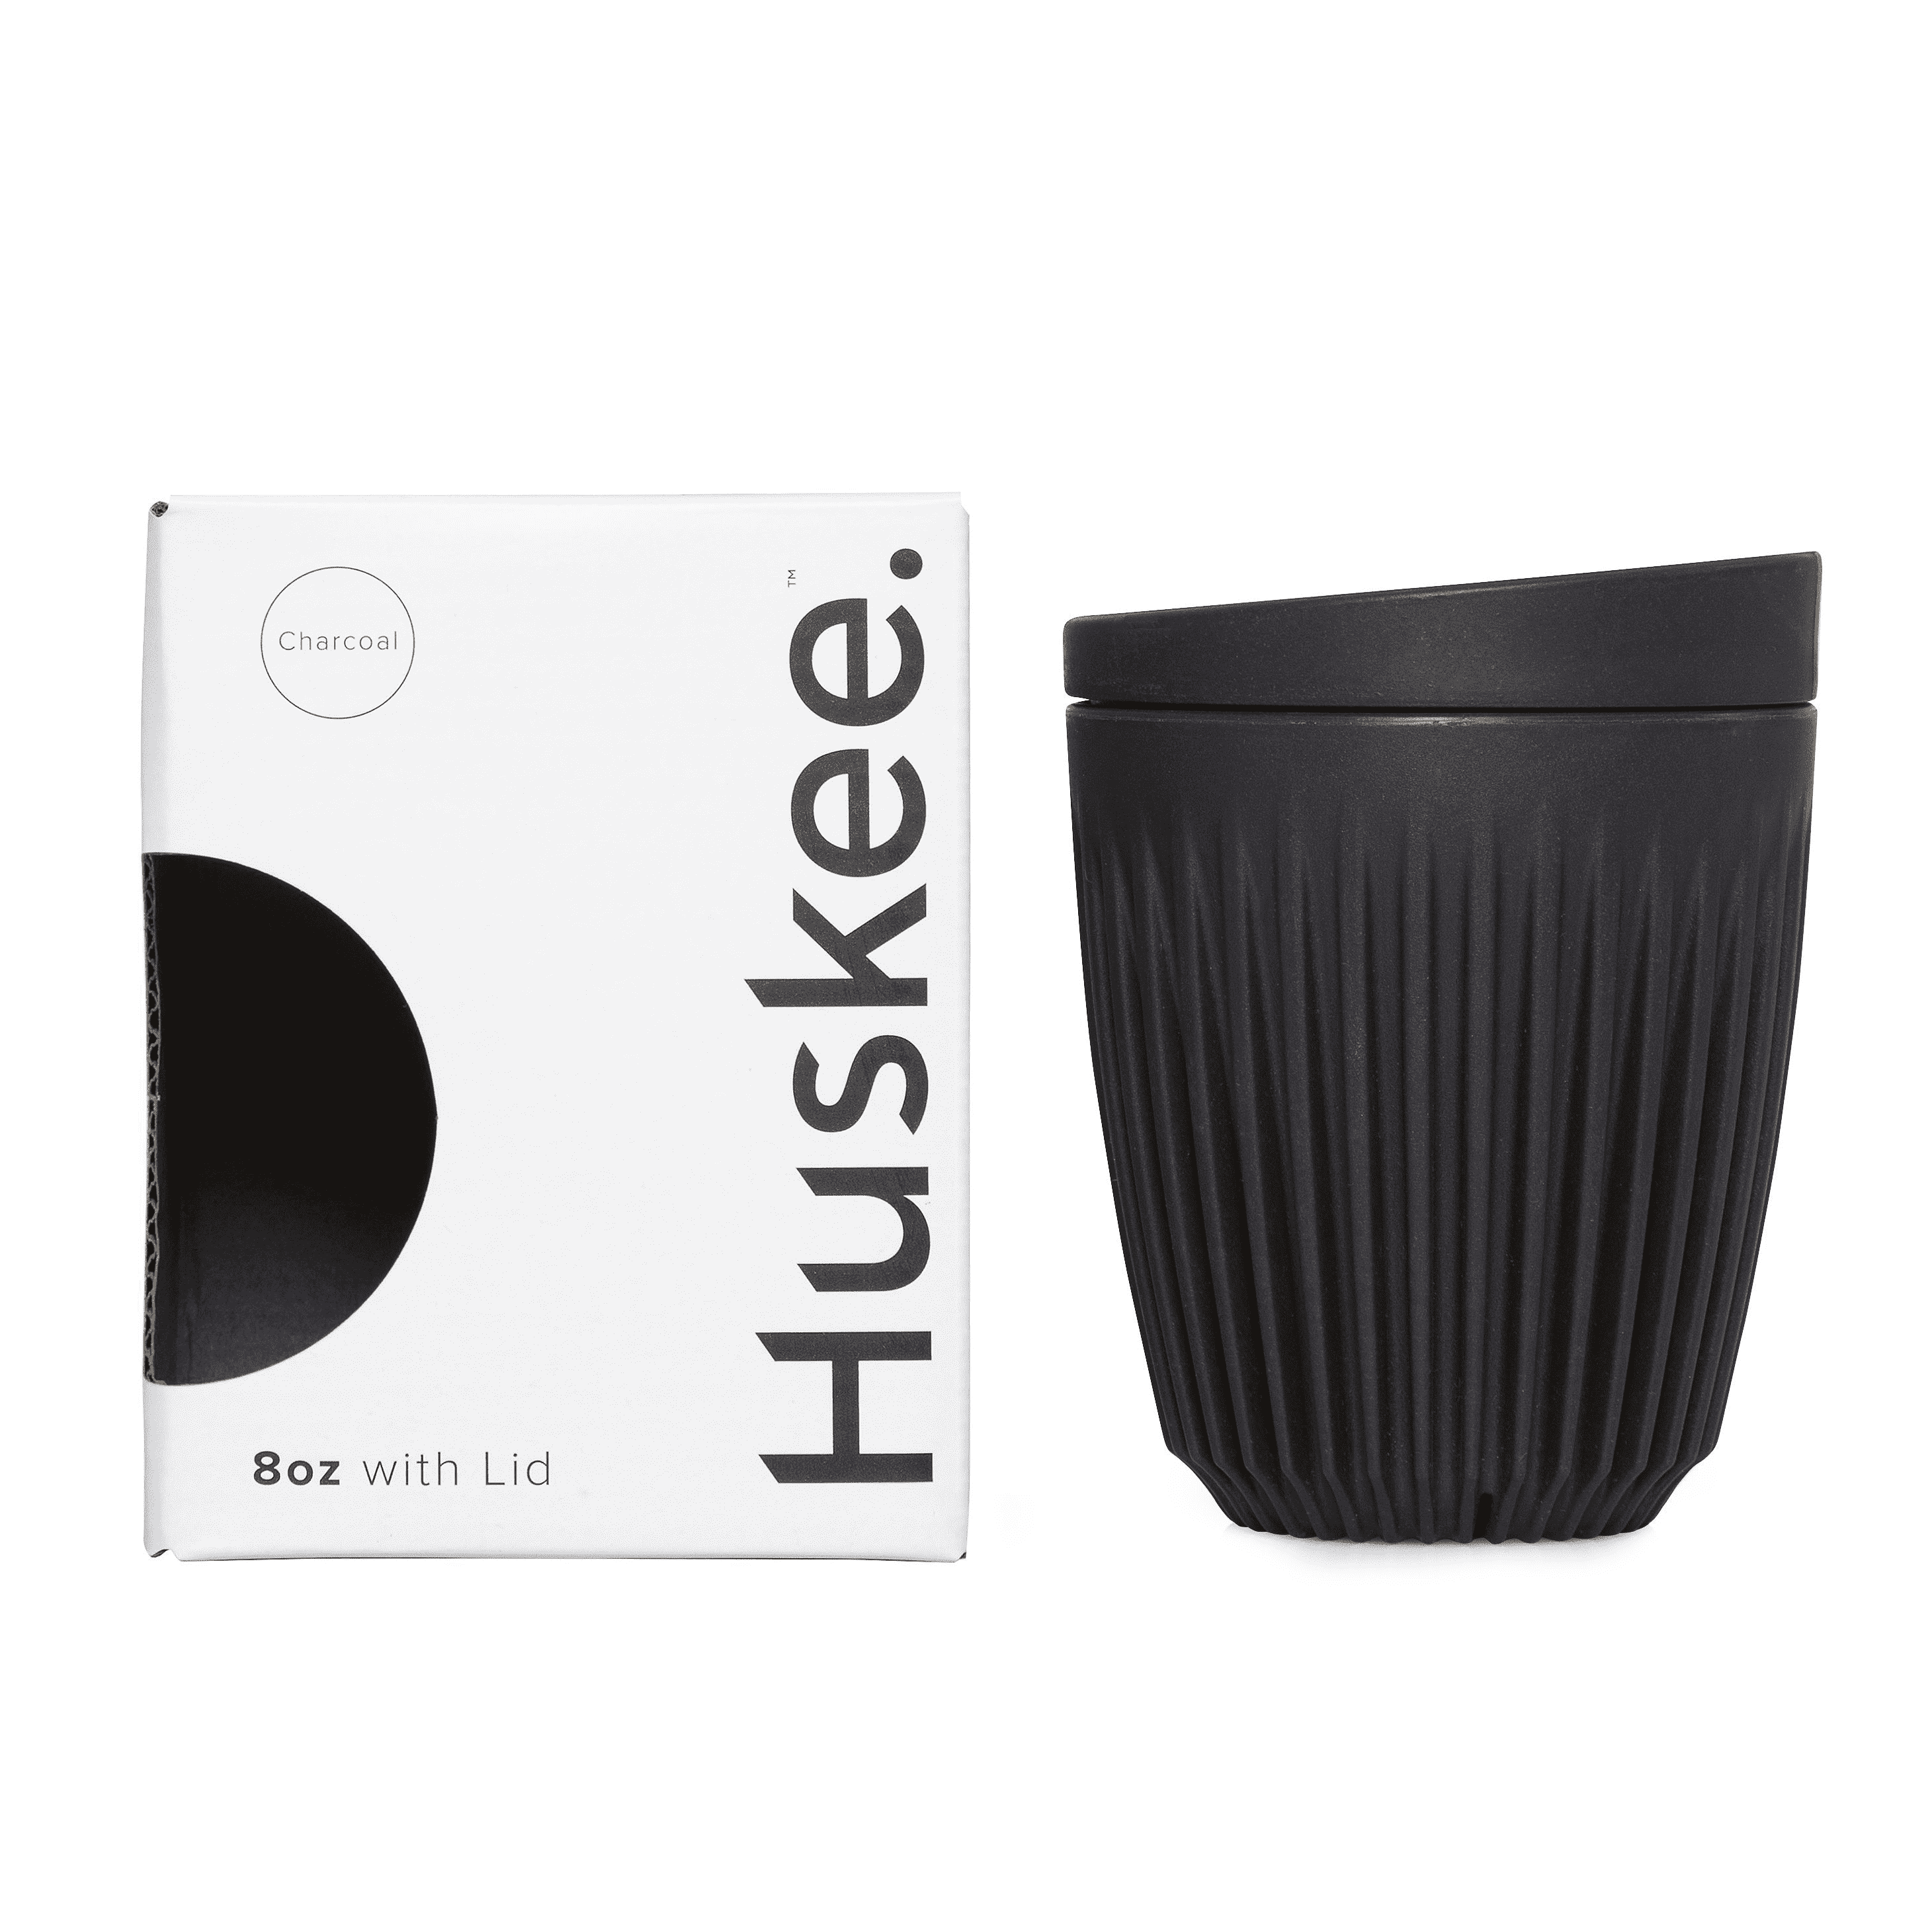 HuskeeCup 8oz Cup & Lid - Single Pack (Charcoal)